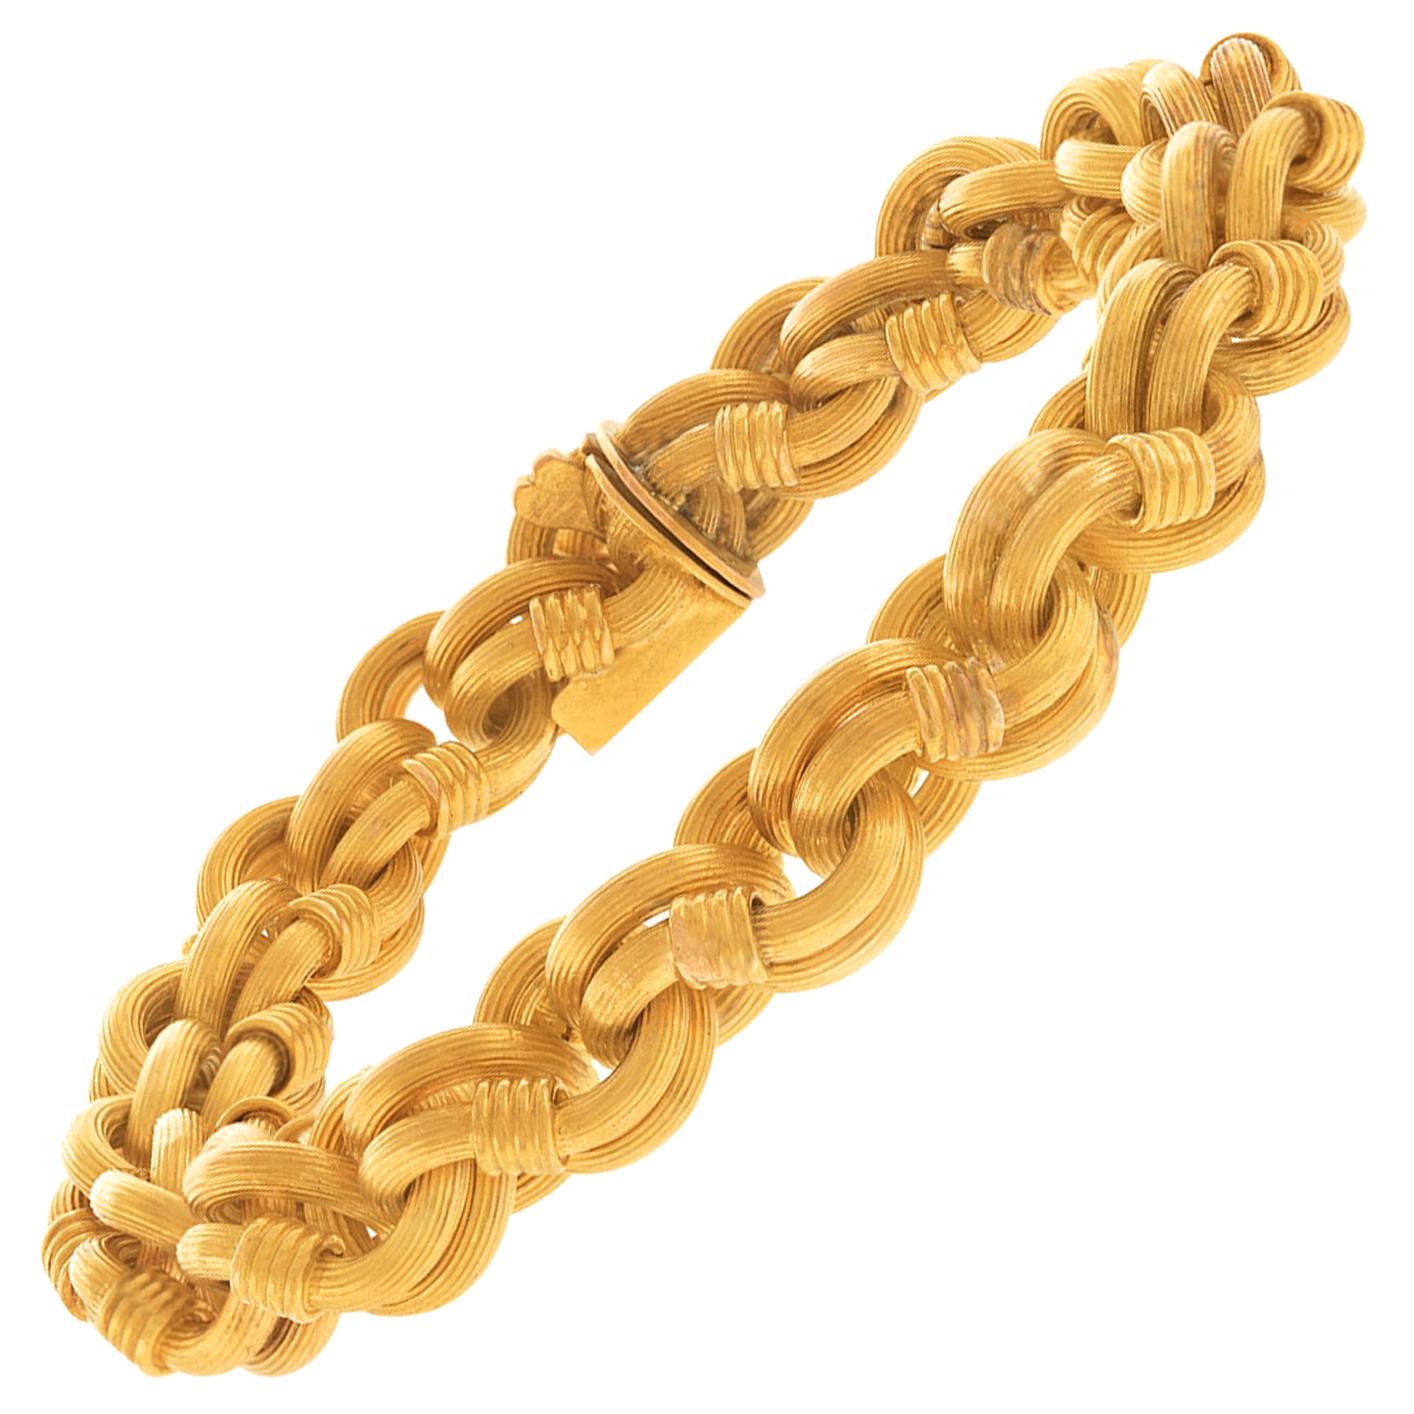 Antique Gold Bracelet French